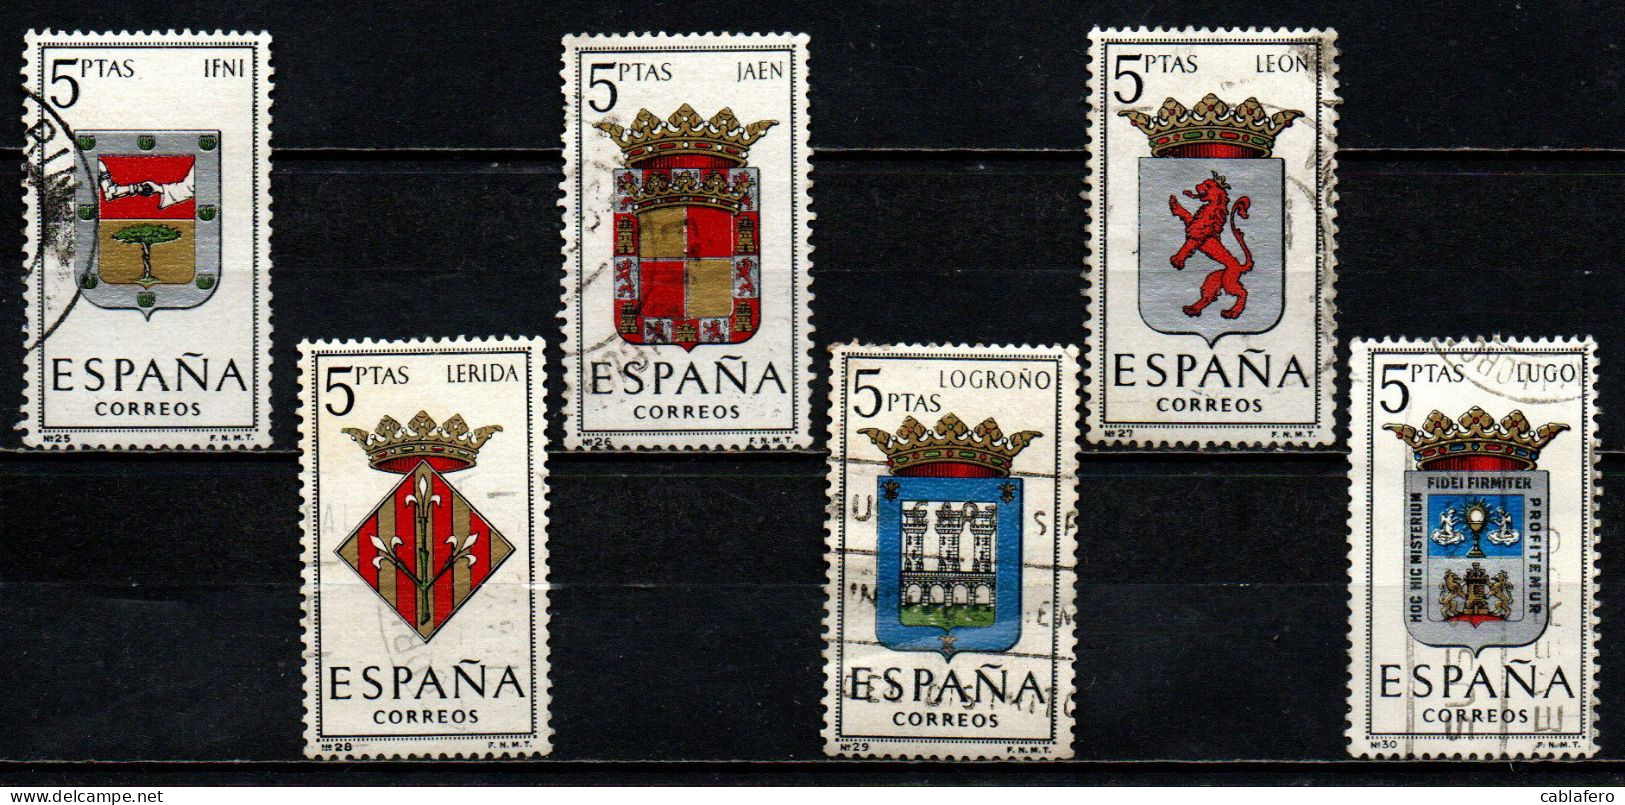 SPAGNA - 1964 - STEMMI DELLE PROVINCE SPAGNOLE: IFNI, JAEN, LEON, LERIDA, LOGRONO, LUGO - USATI - Usados